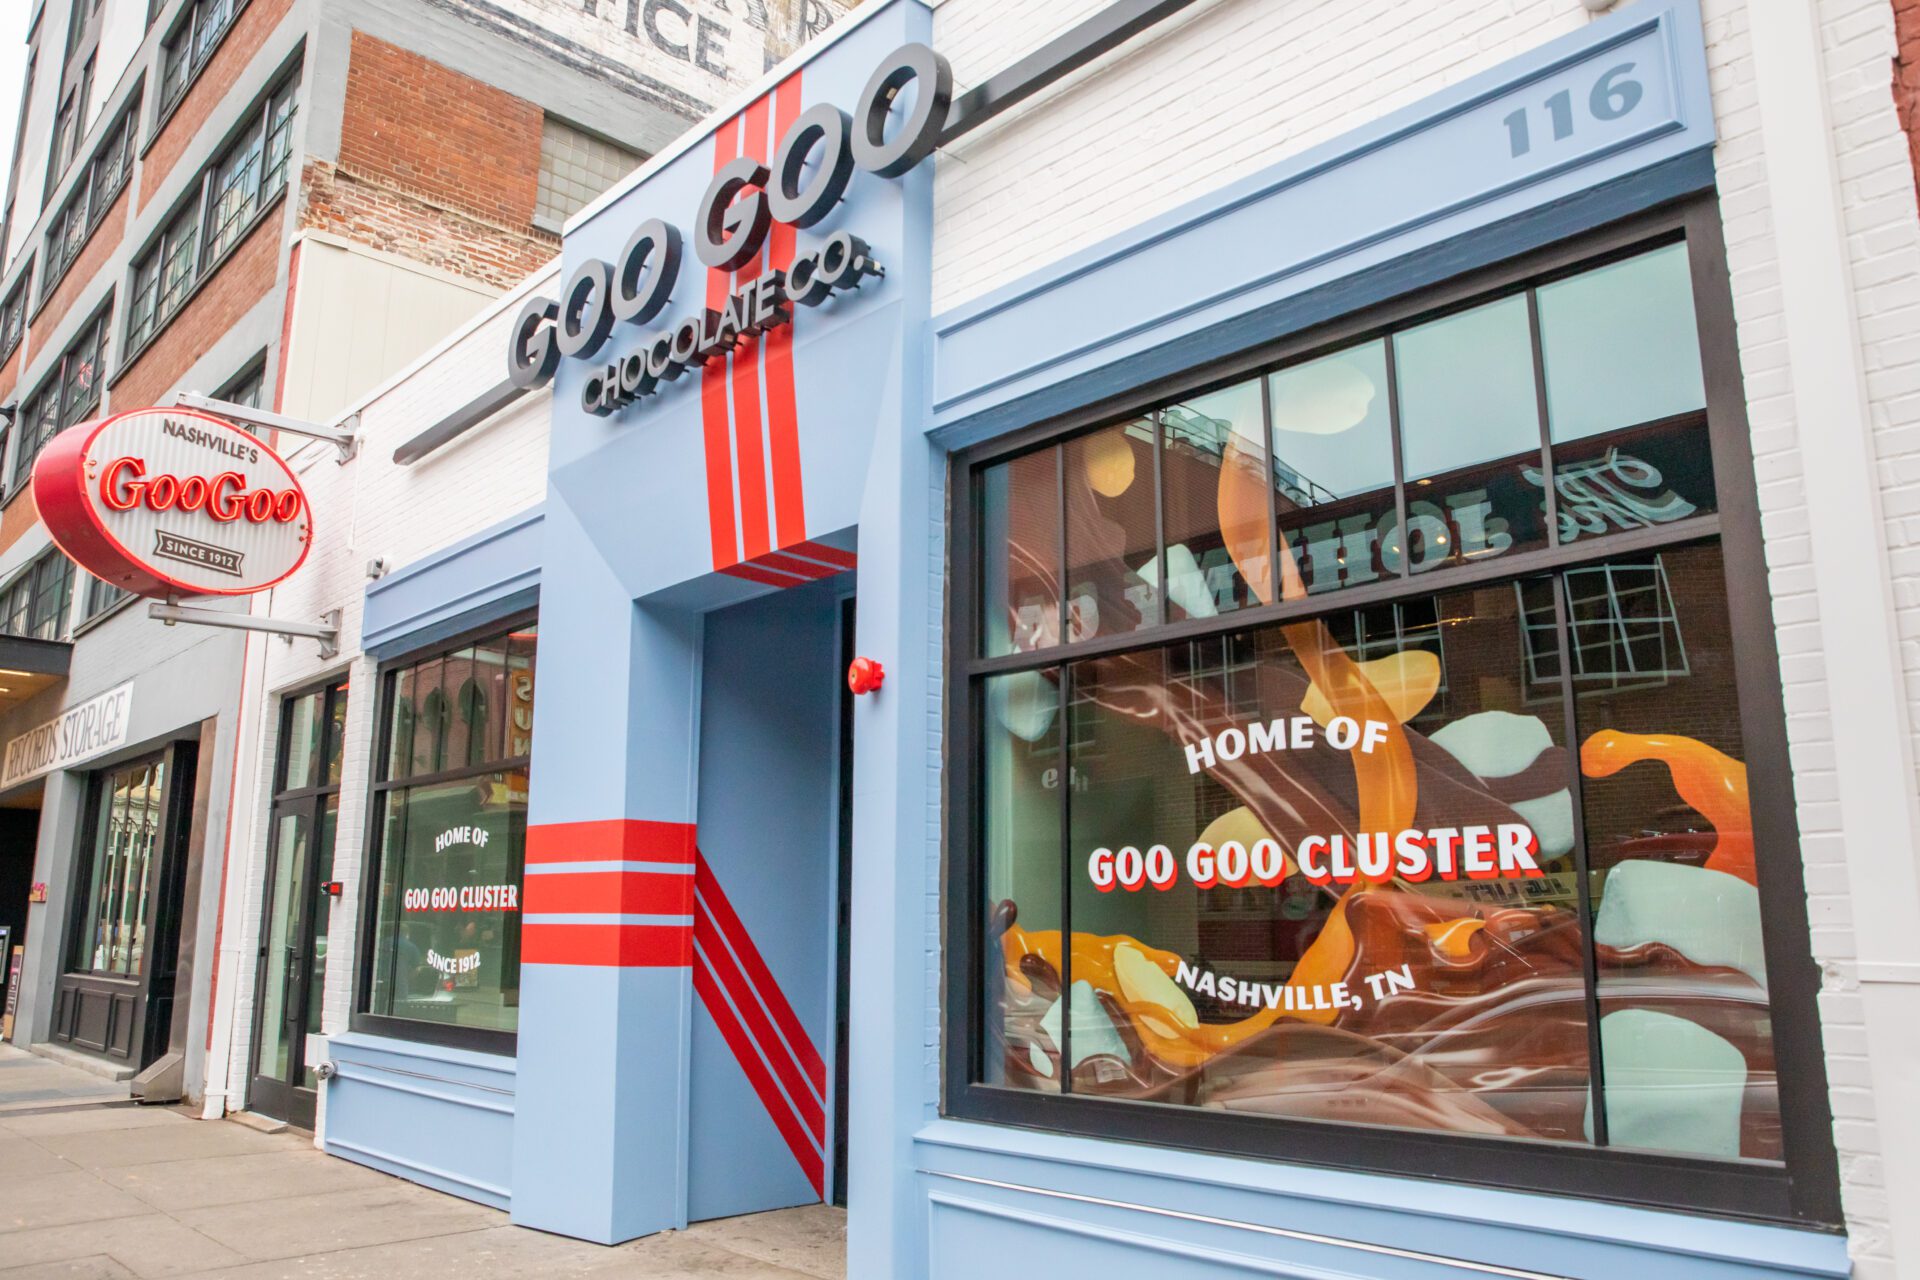 Goo Goo Cluster Nashville store front.